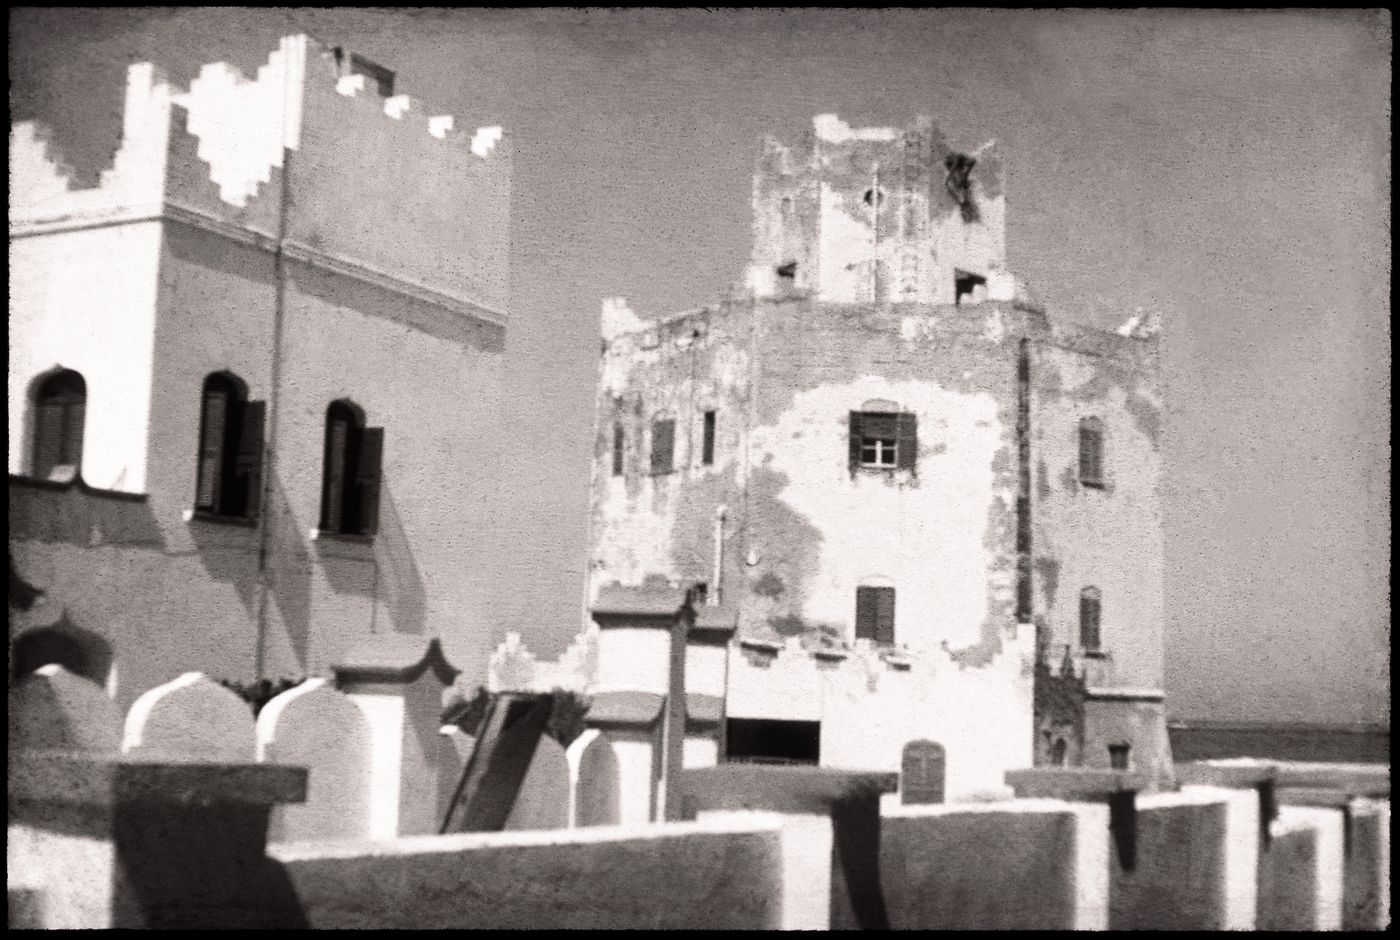 View of waterfront buildings in Mogadishu, Somalia